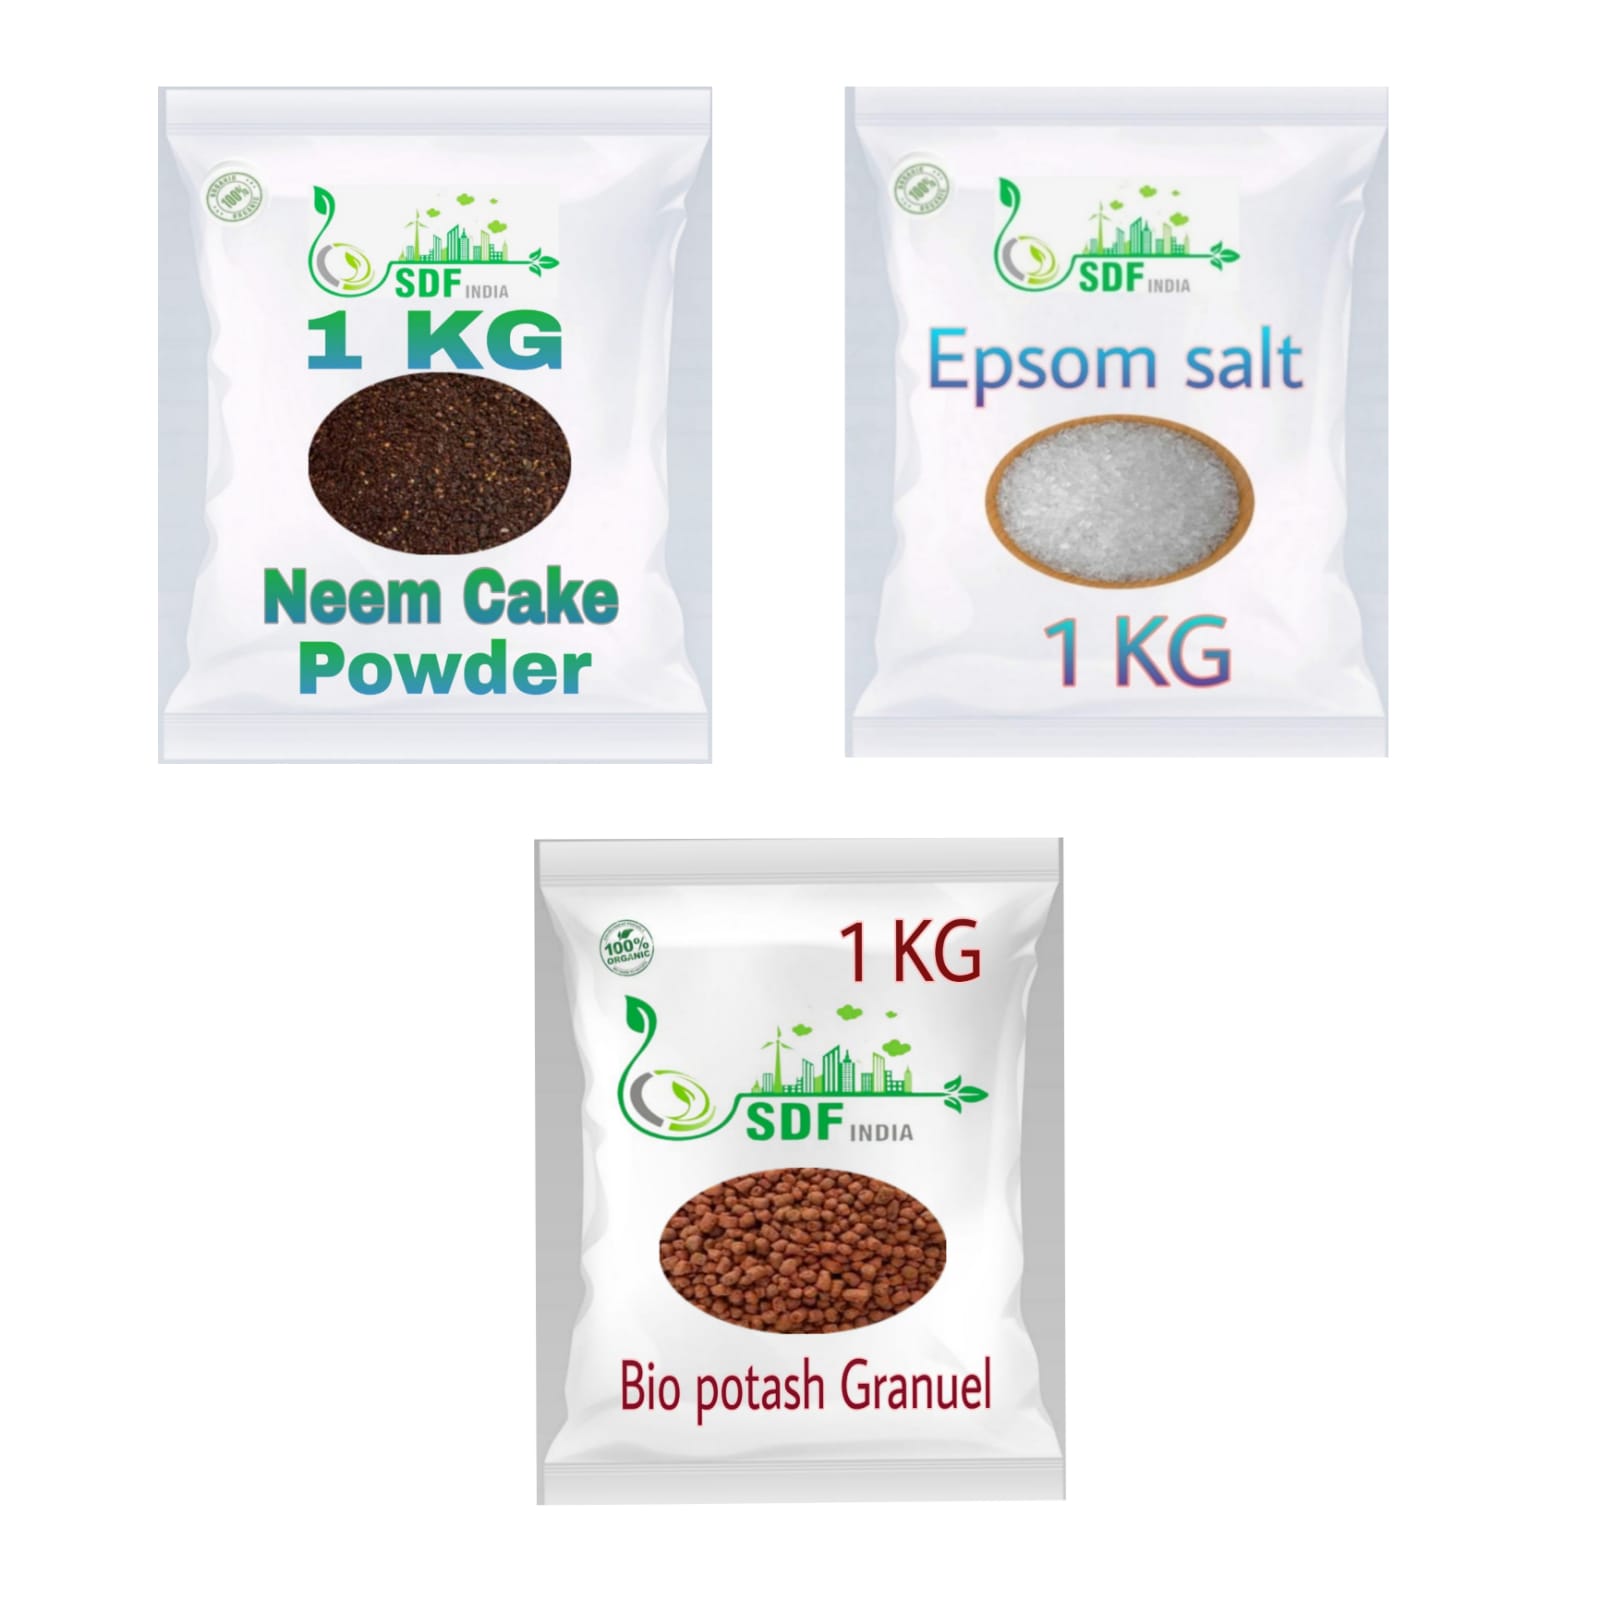 COMBO PACK OF 3 ( 1 KG Neem Cake Powder/1 KG Epsom Salt/1 KG Bio Potash Granuels